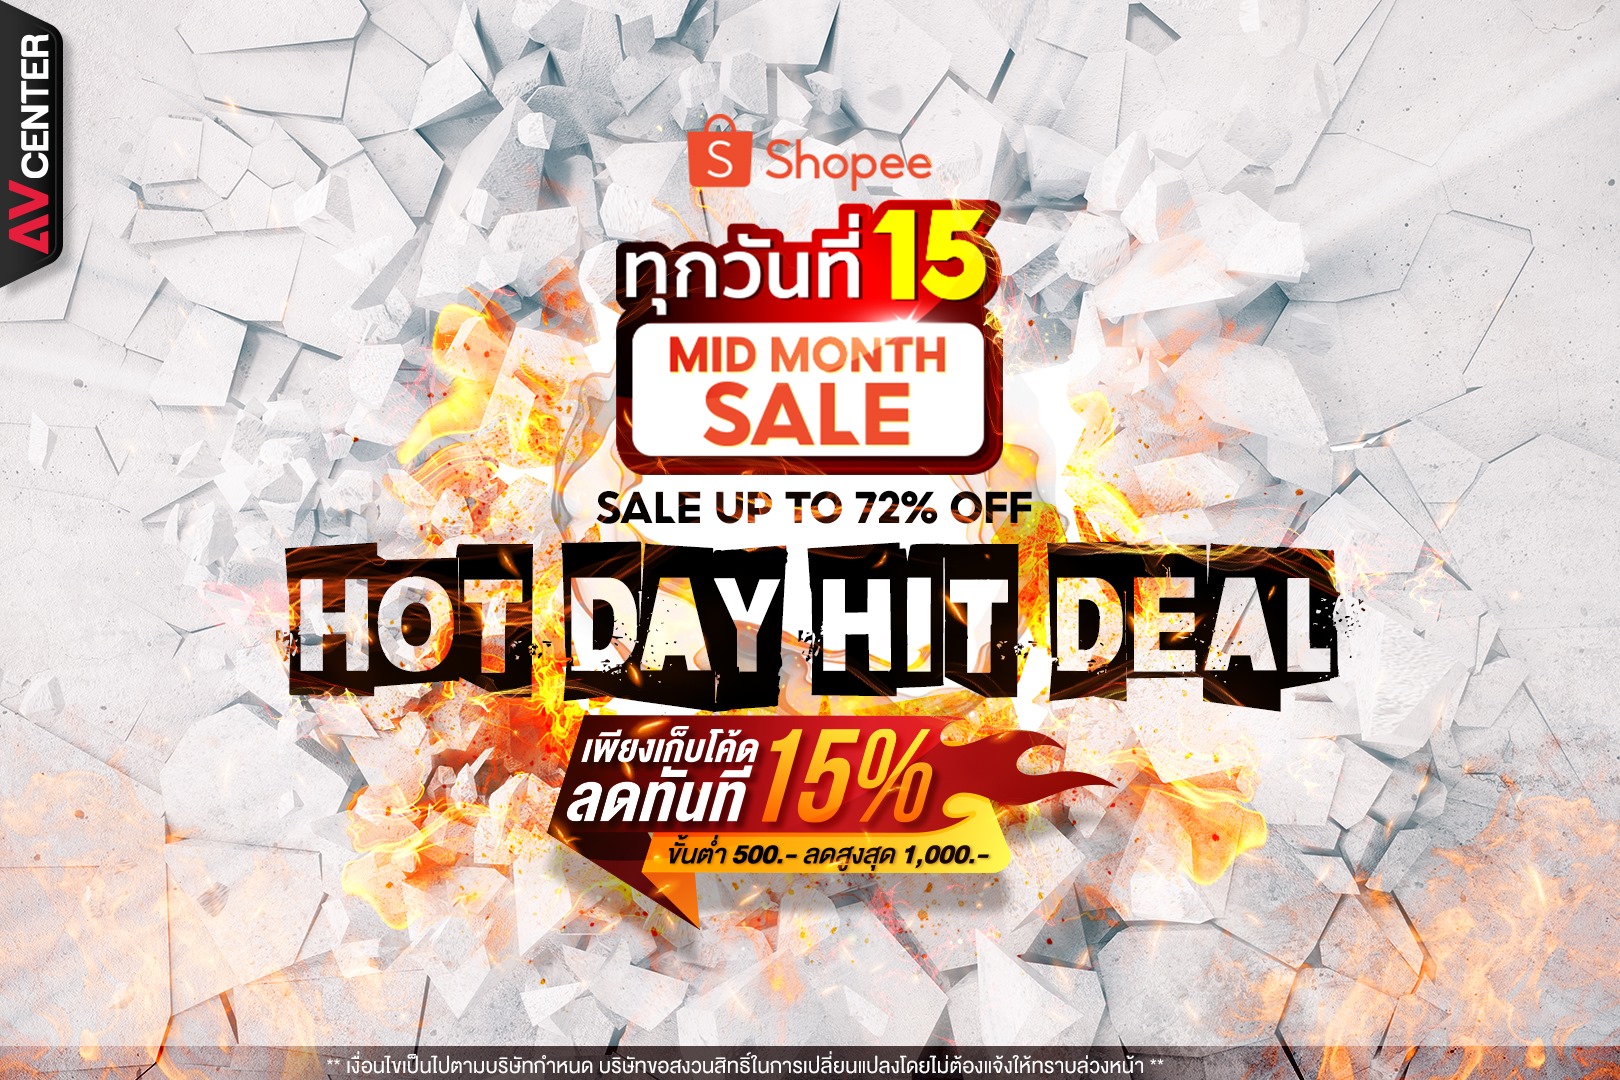 Hot Day Hit Deal ดีลฮอตช็อกราคา ลดสูงสุด 72%